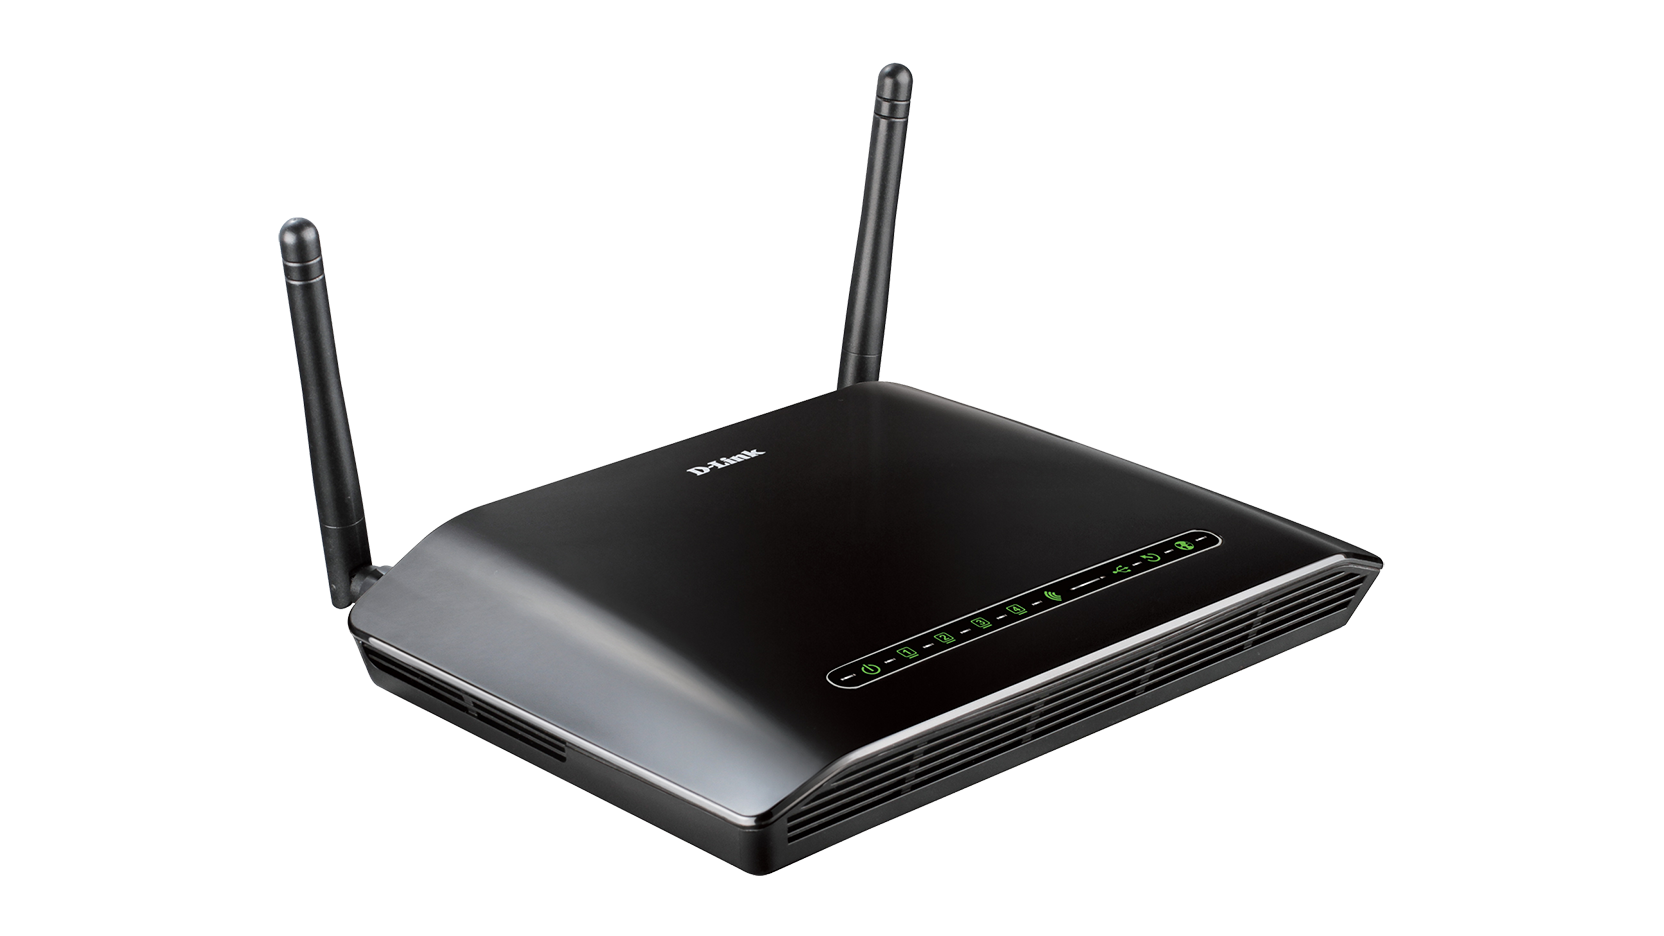 DSL-2751 Wireless N300 ADSL2+ Modem Router | D-Link UK